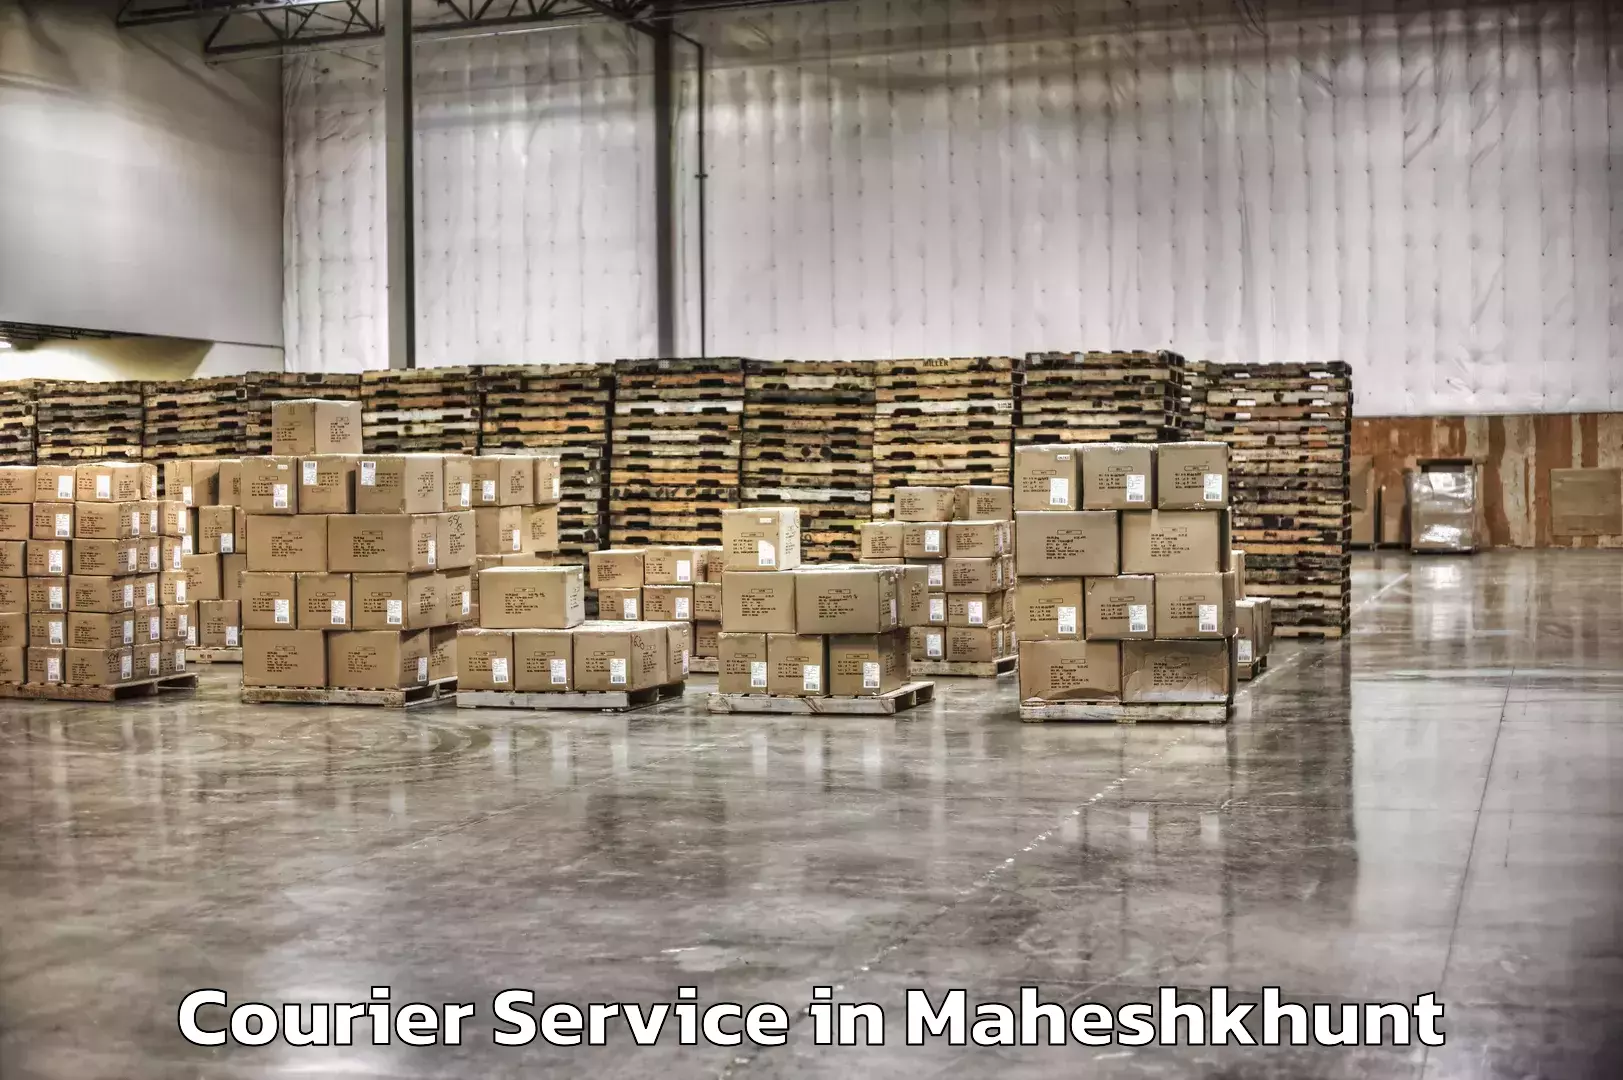 Express logistics in Maheshkhunt